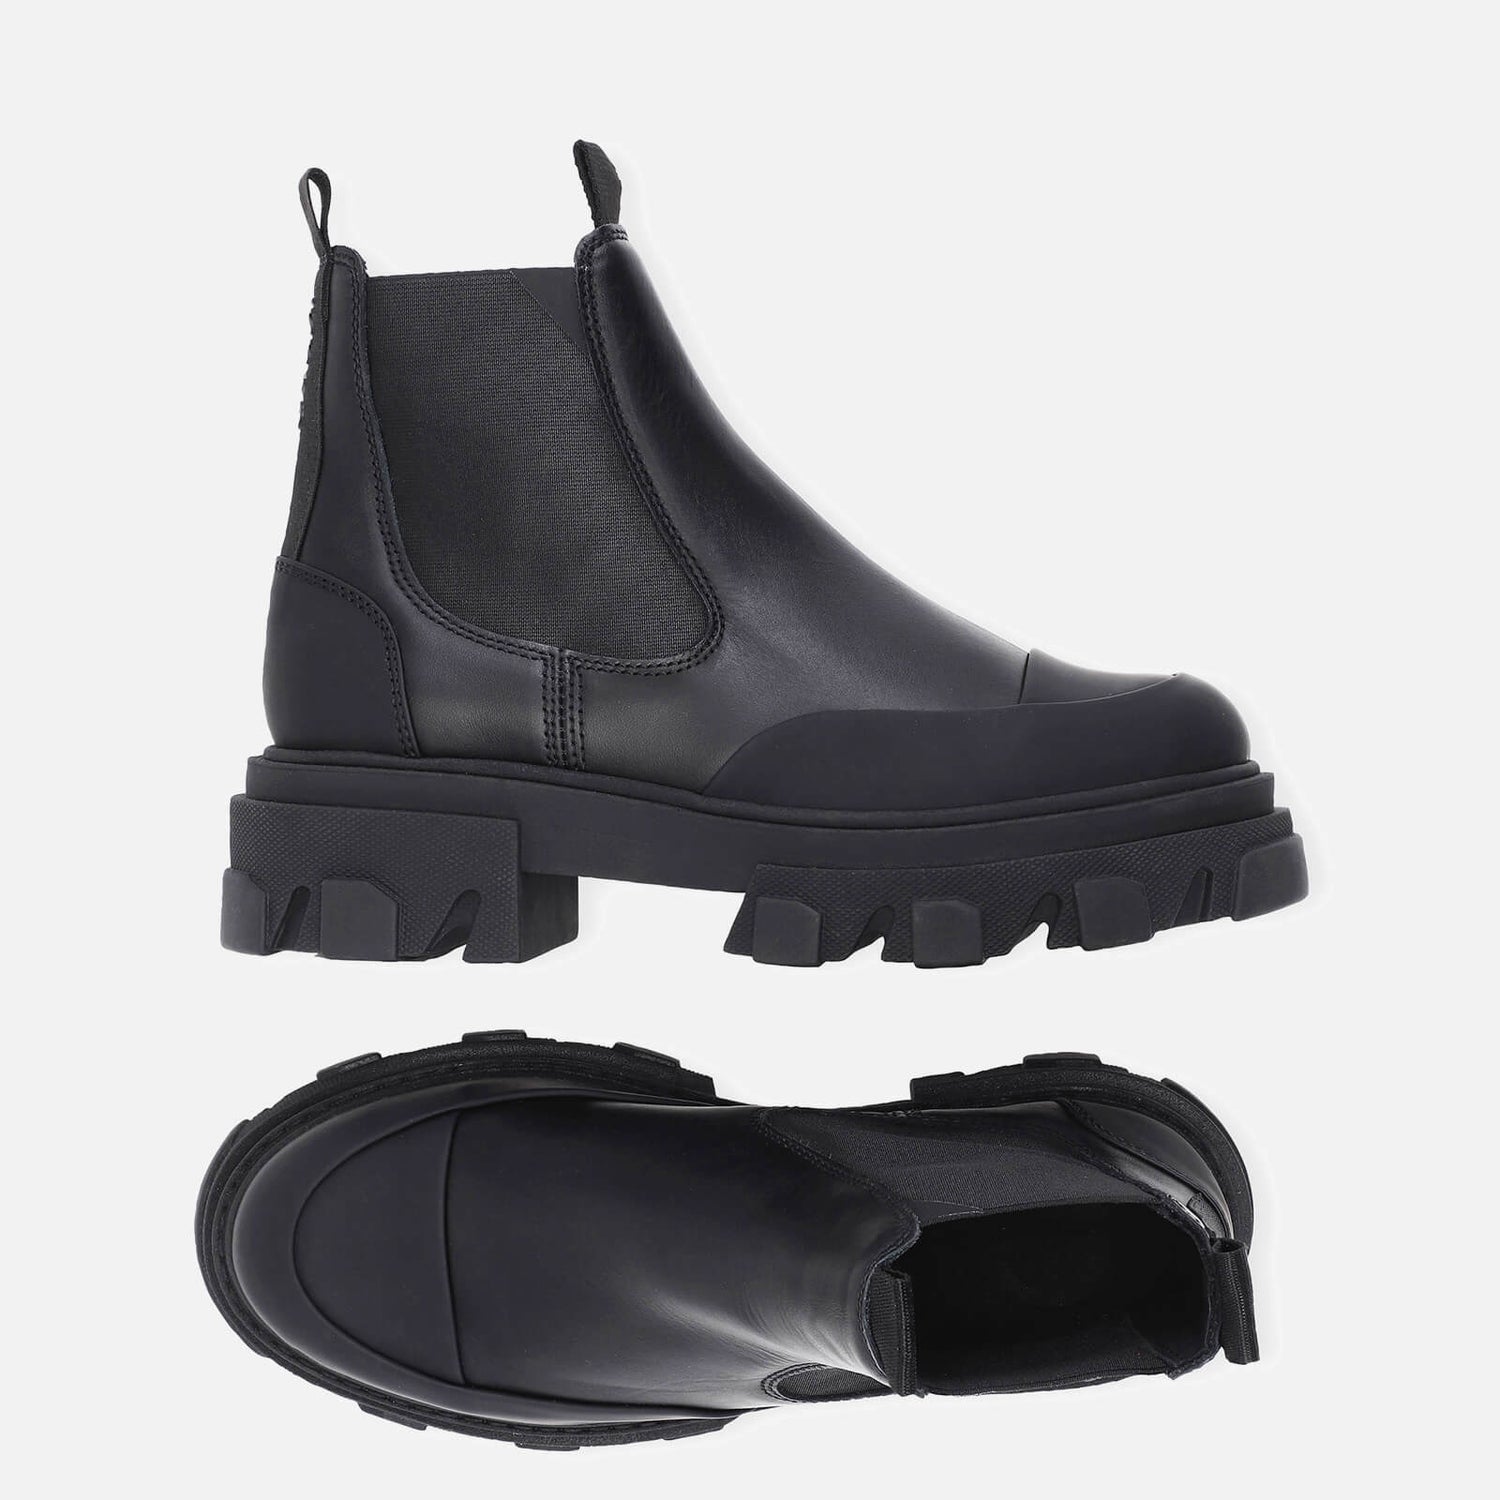 Ganni Women's Leather Chelsea Boots - Black - UK 3